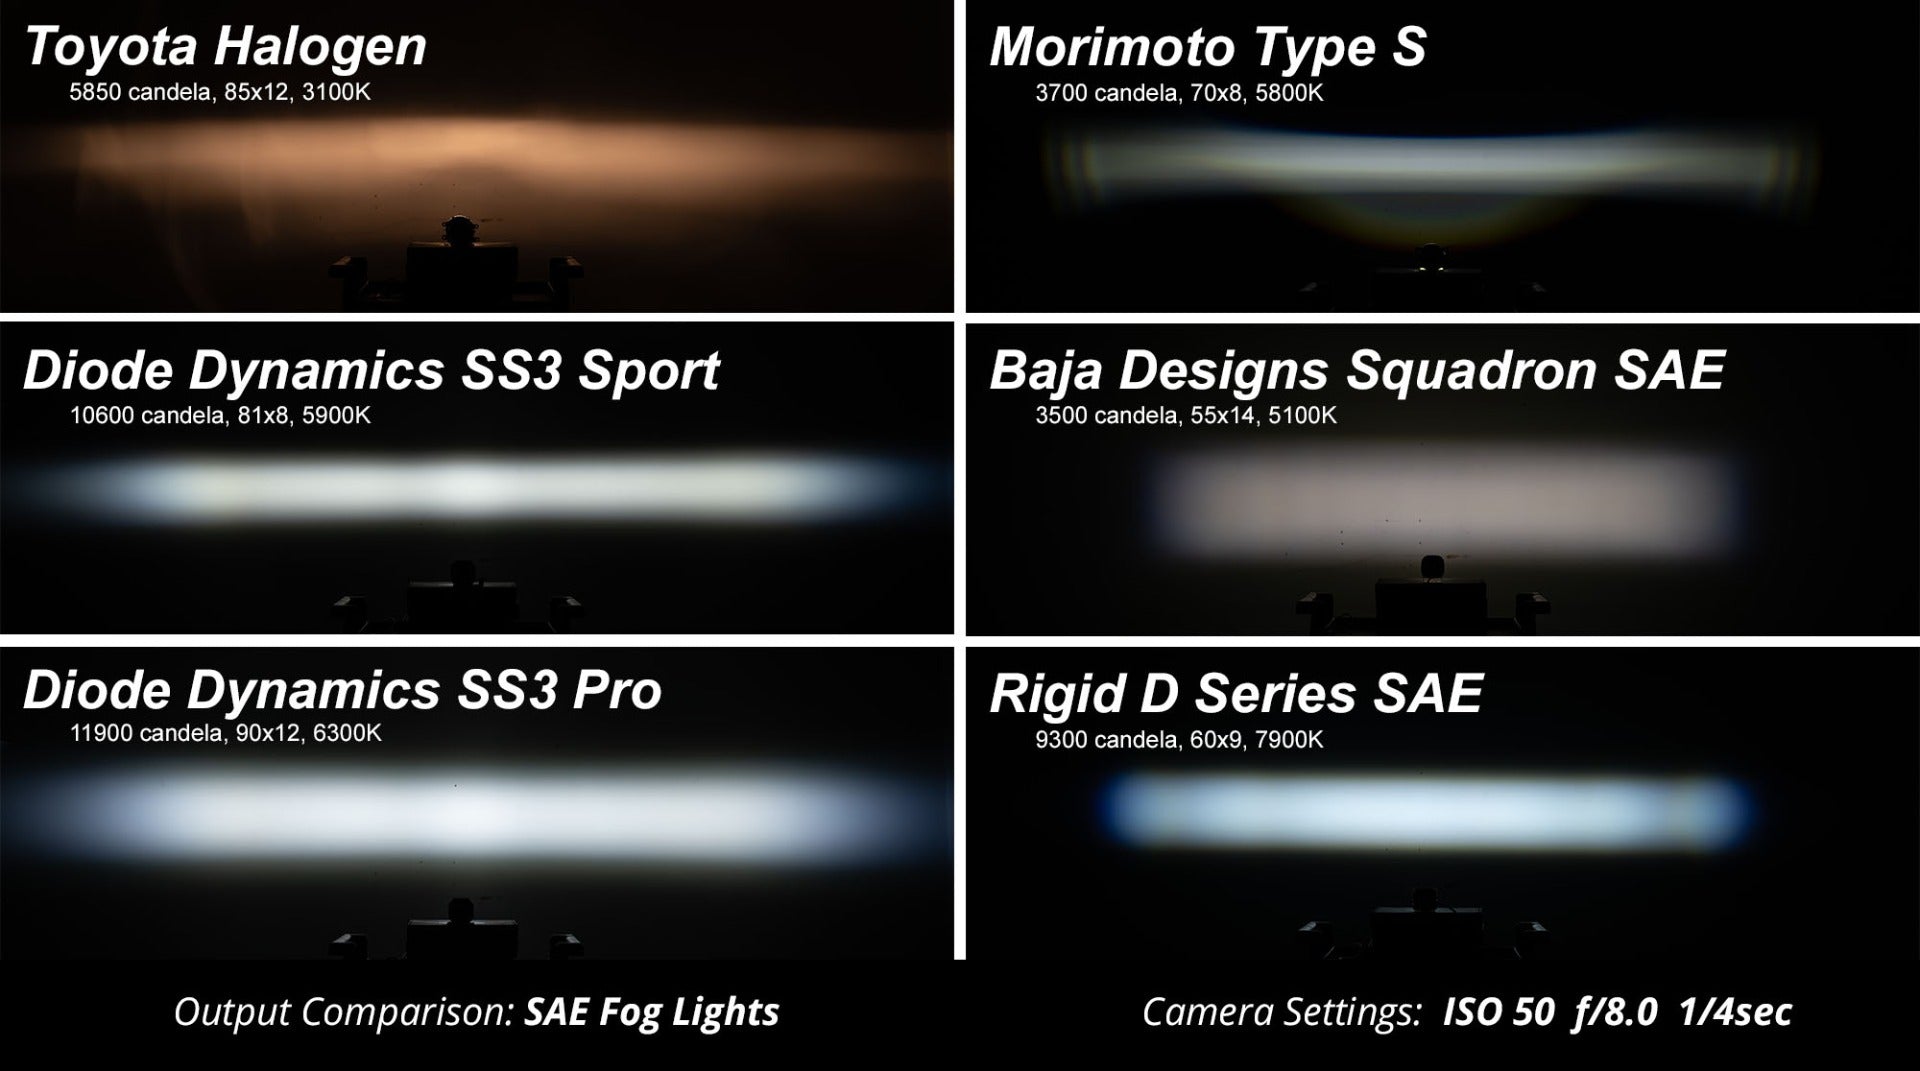 SS3 LED Fog Light Kit for 2015-2017 Ford Mustang Yellow SAE Fog Pro Diode Dynamics